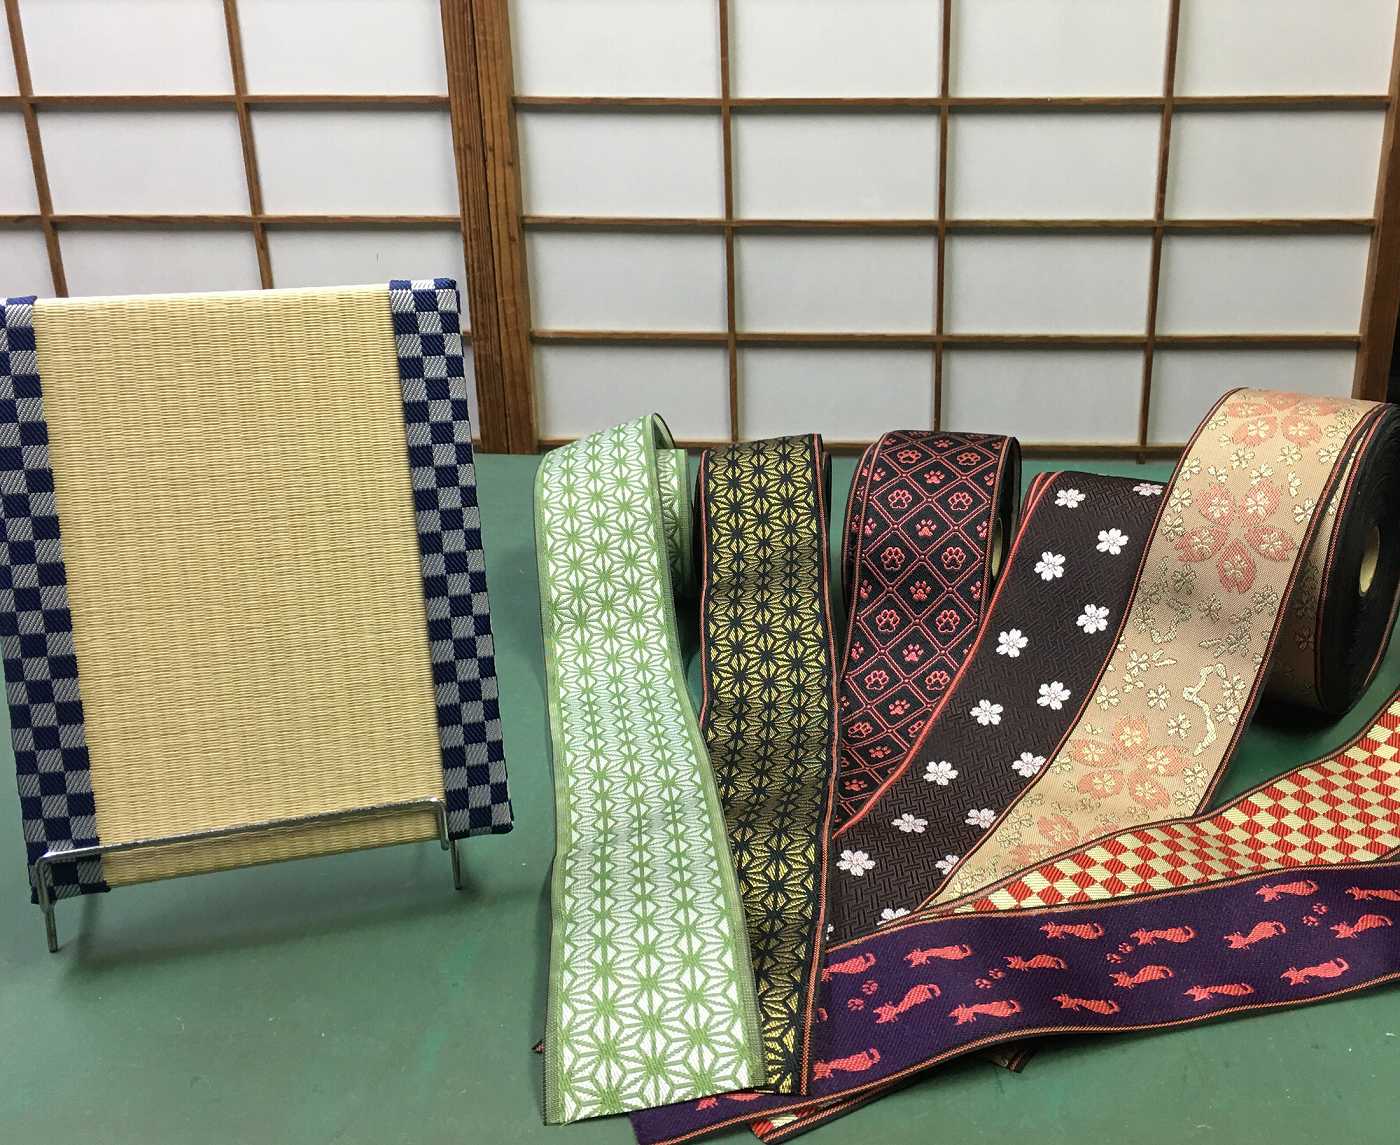 Craft making using traditional tatami mats